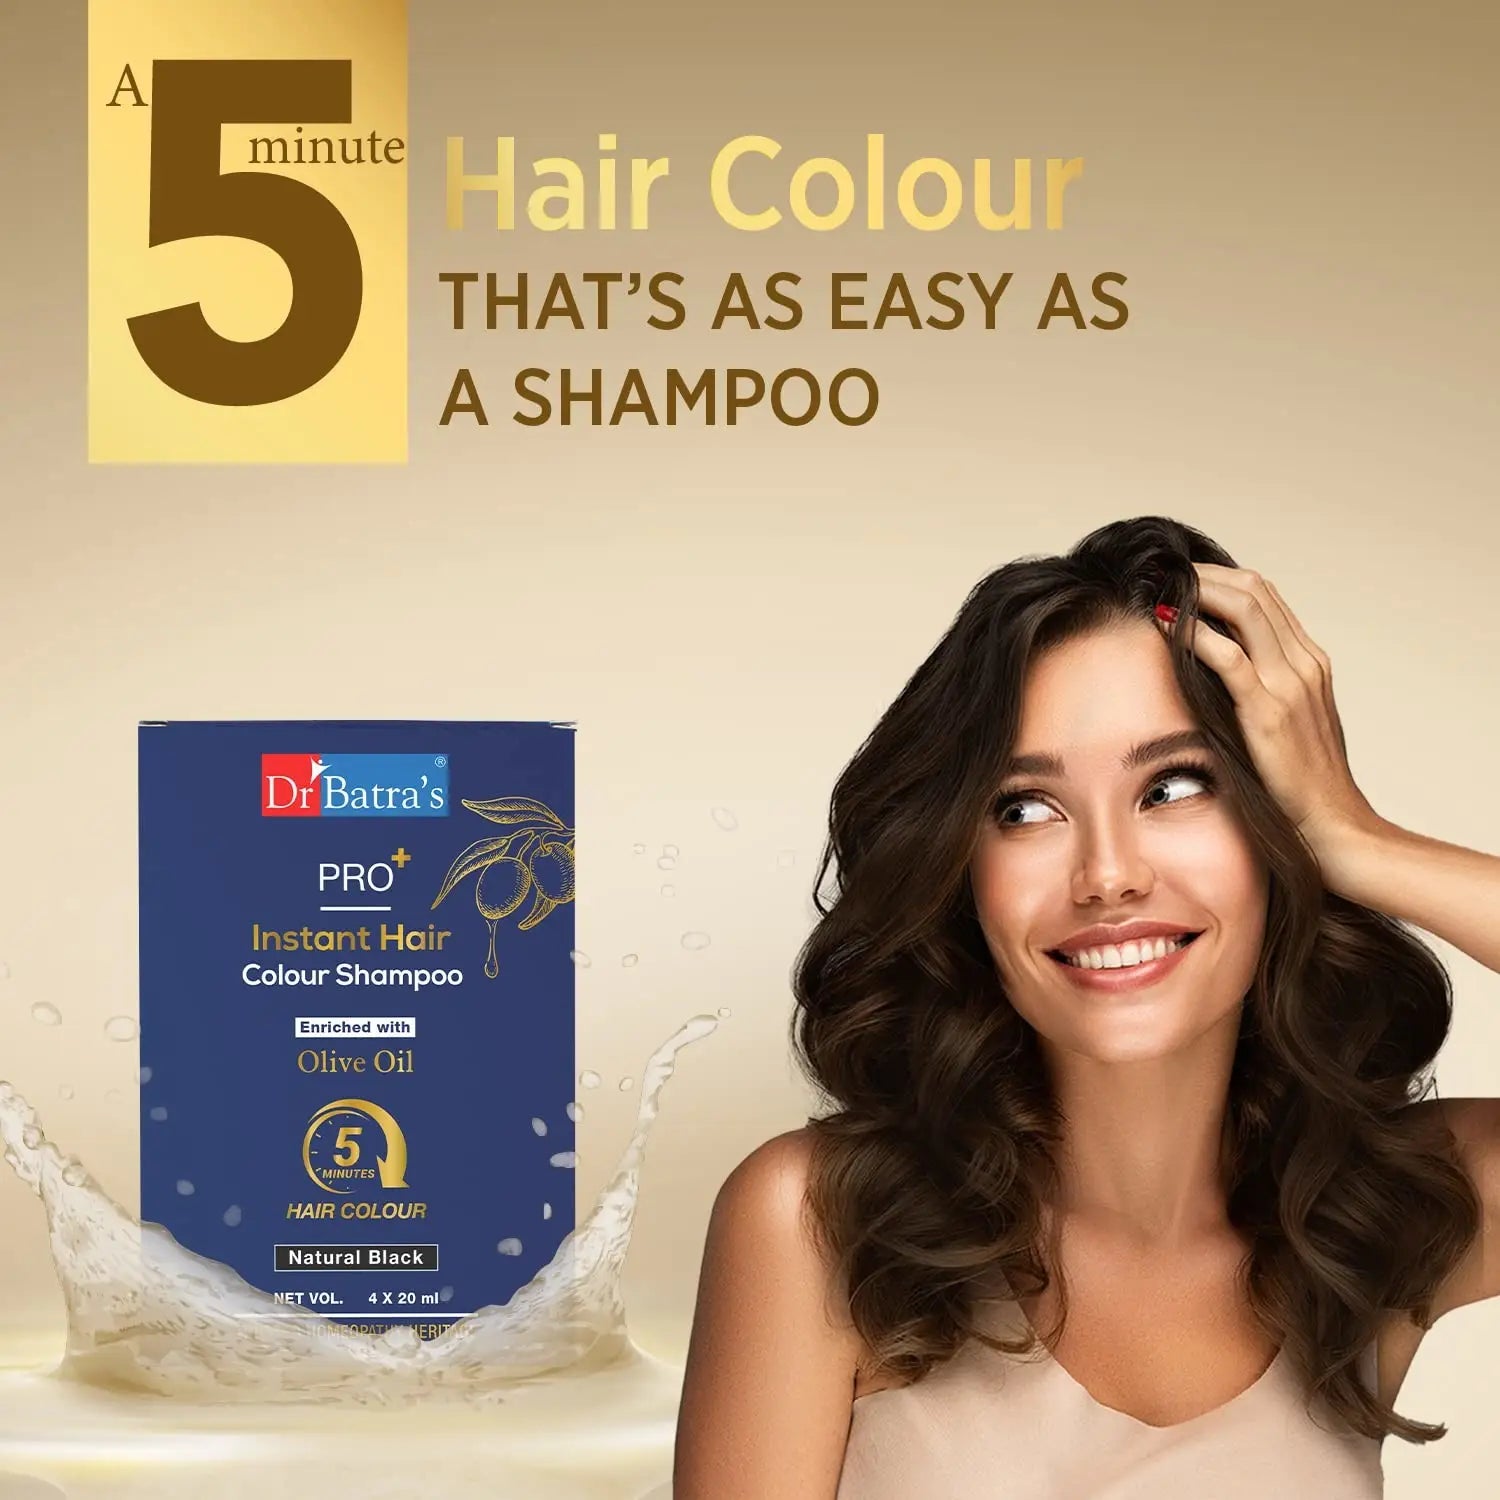 Dr Batra’s Pro + Instant Hair Colour Shampoo - Natural